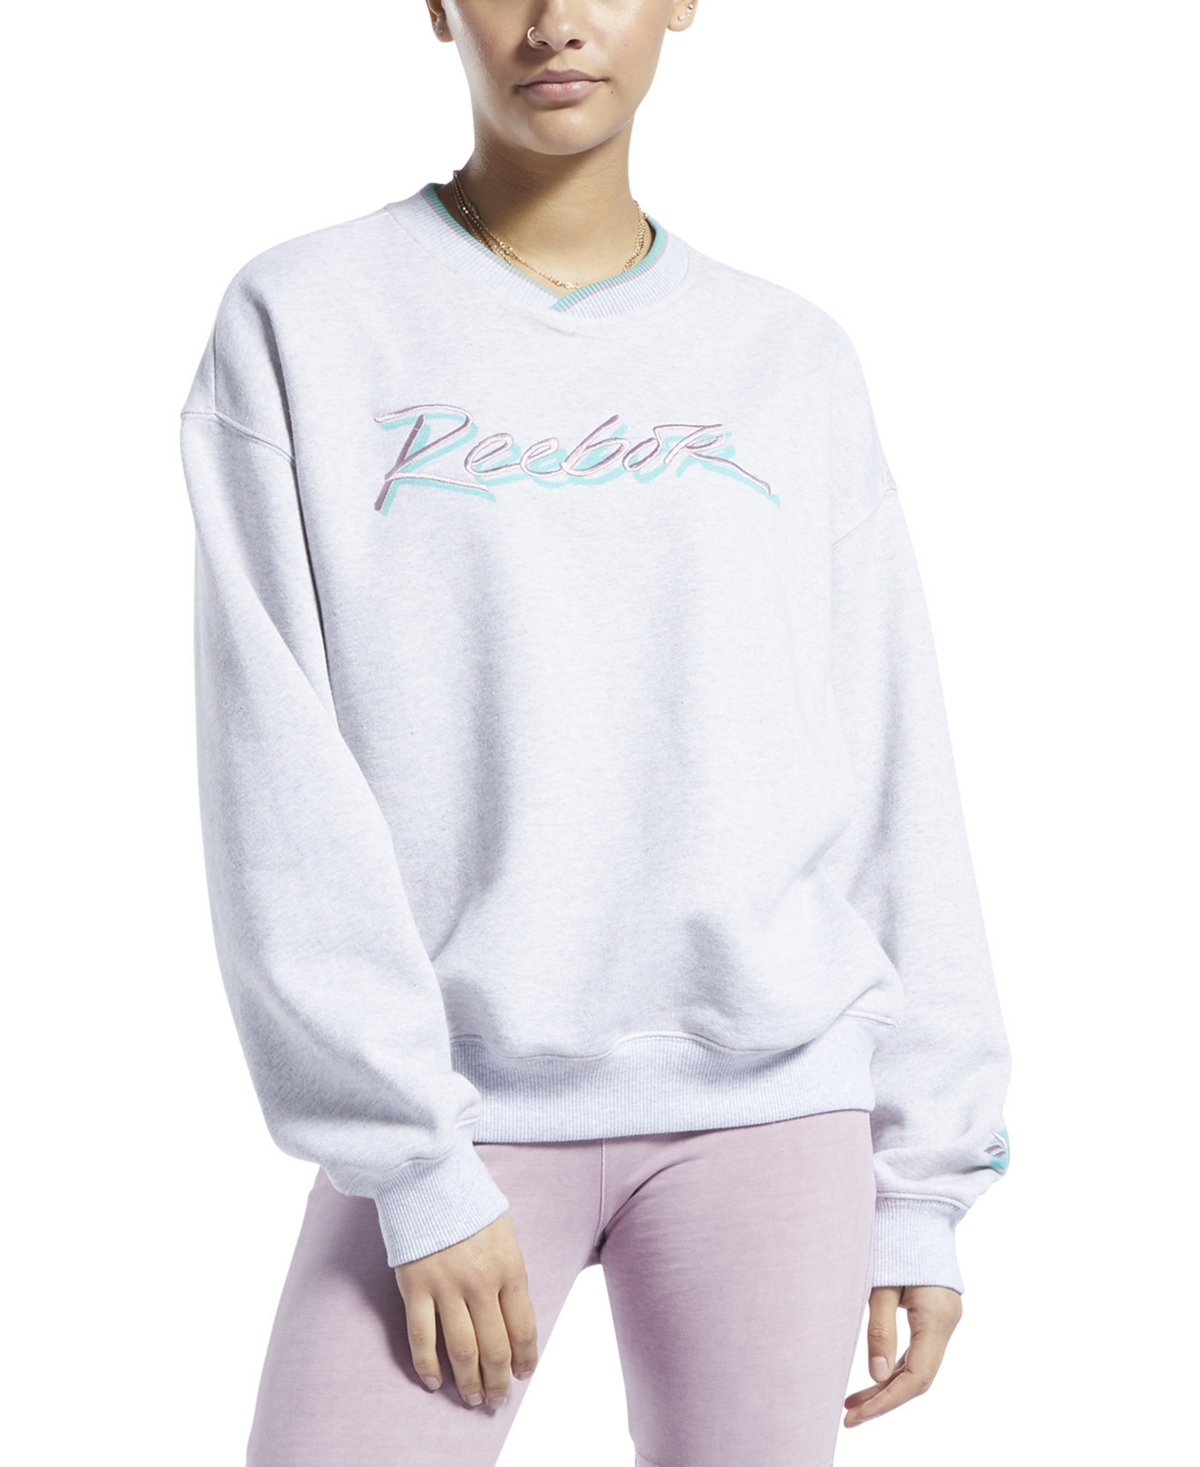  Reebok Women's Classics Energy Graphic Cotton Sweatshirt